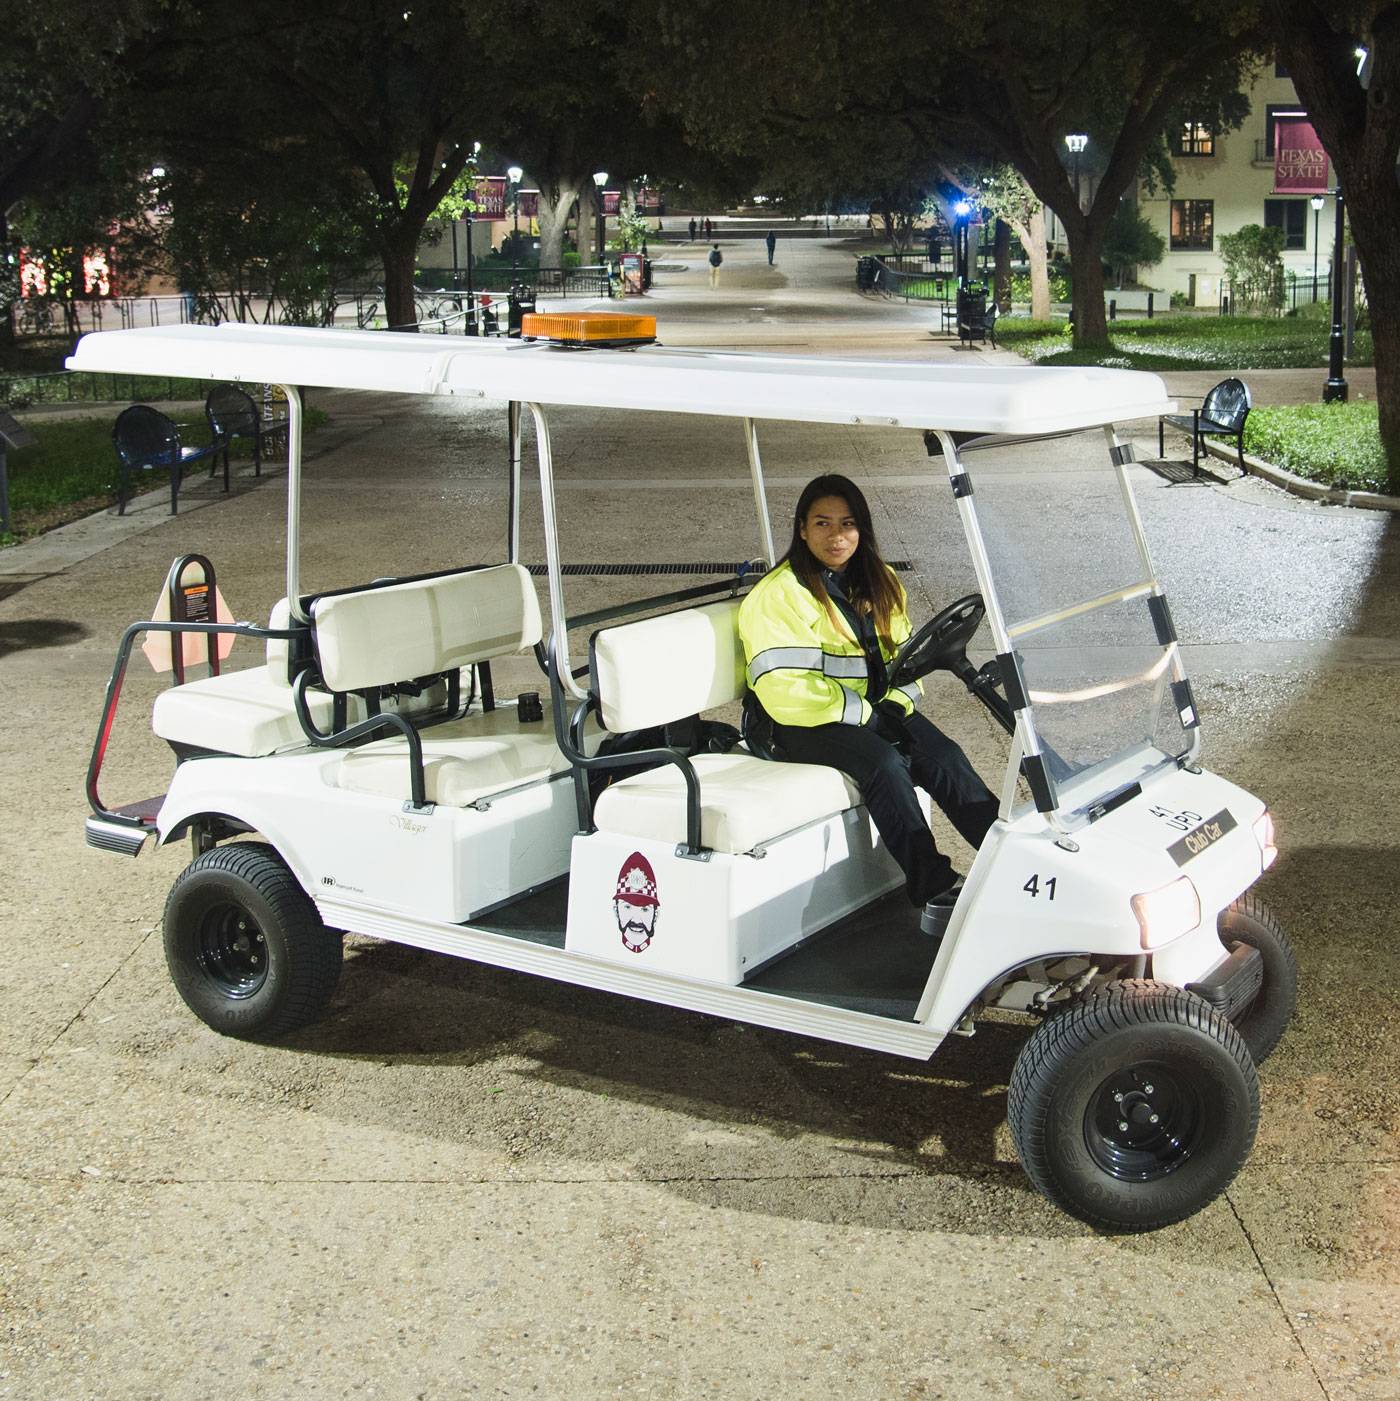 Bobcat Bobbies ride carts around campus